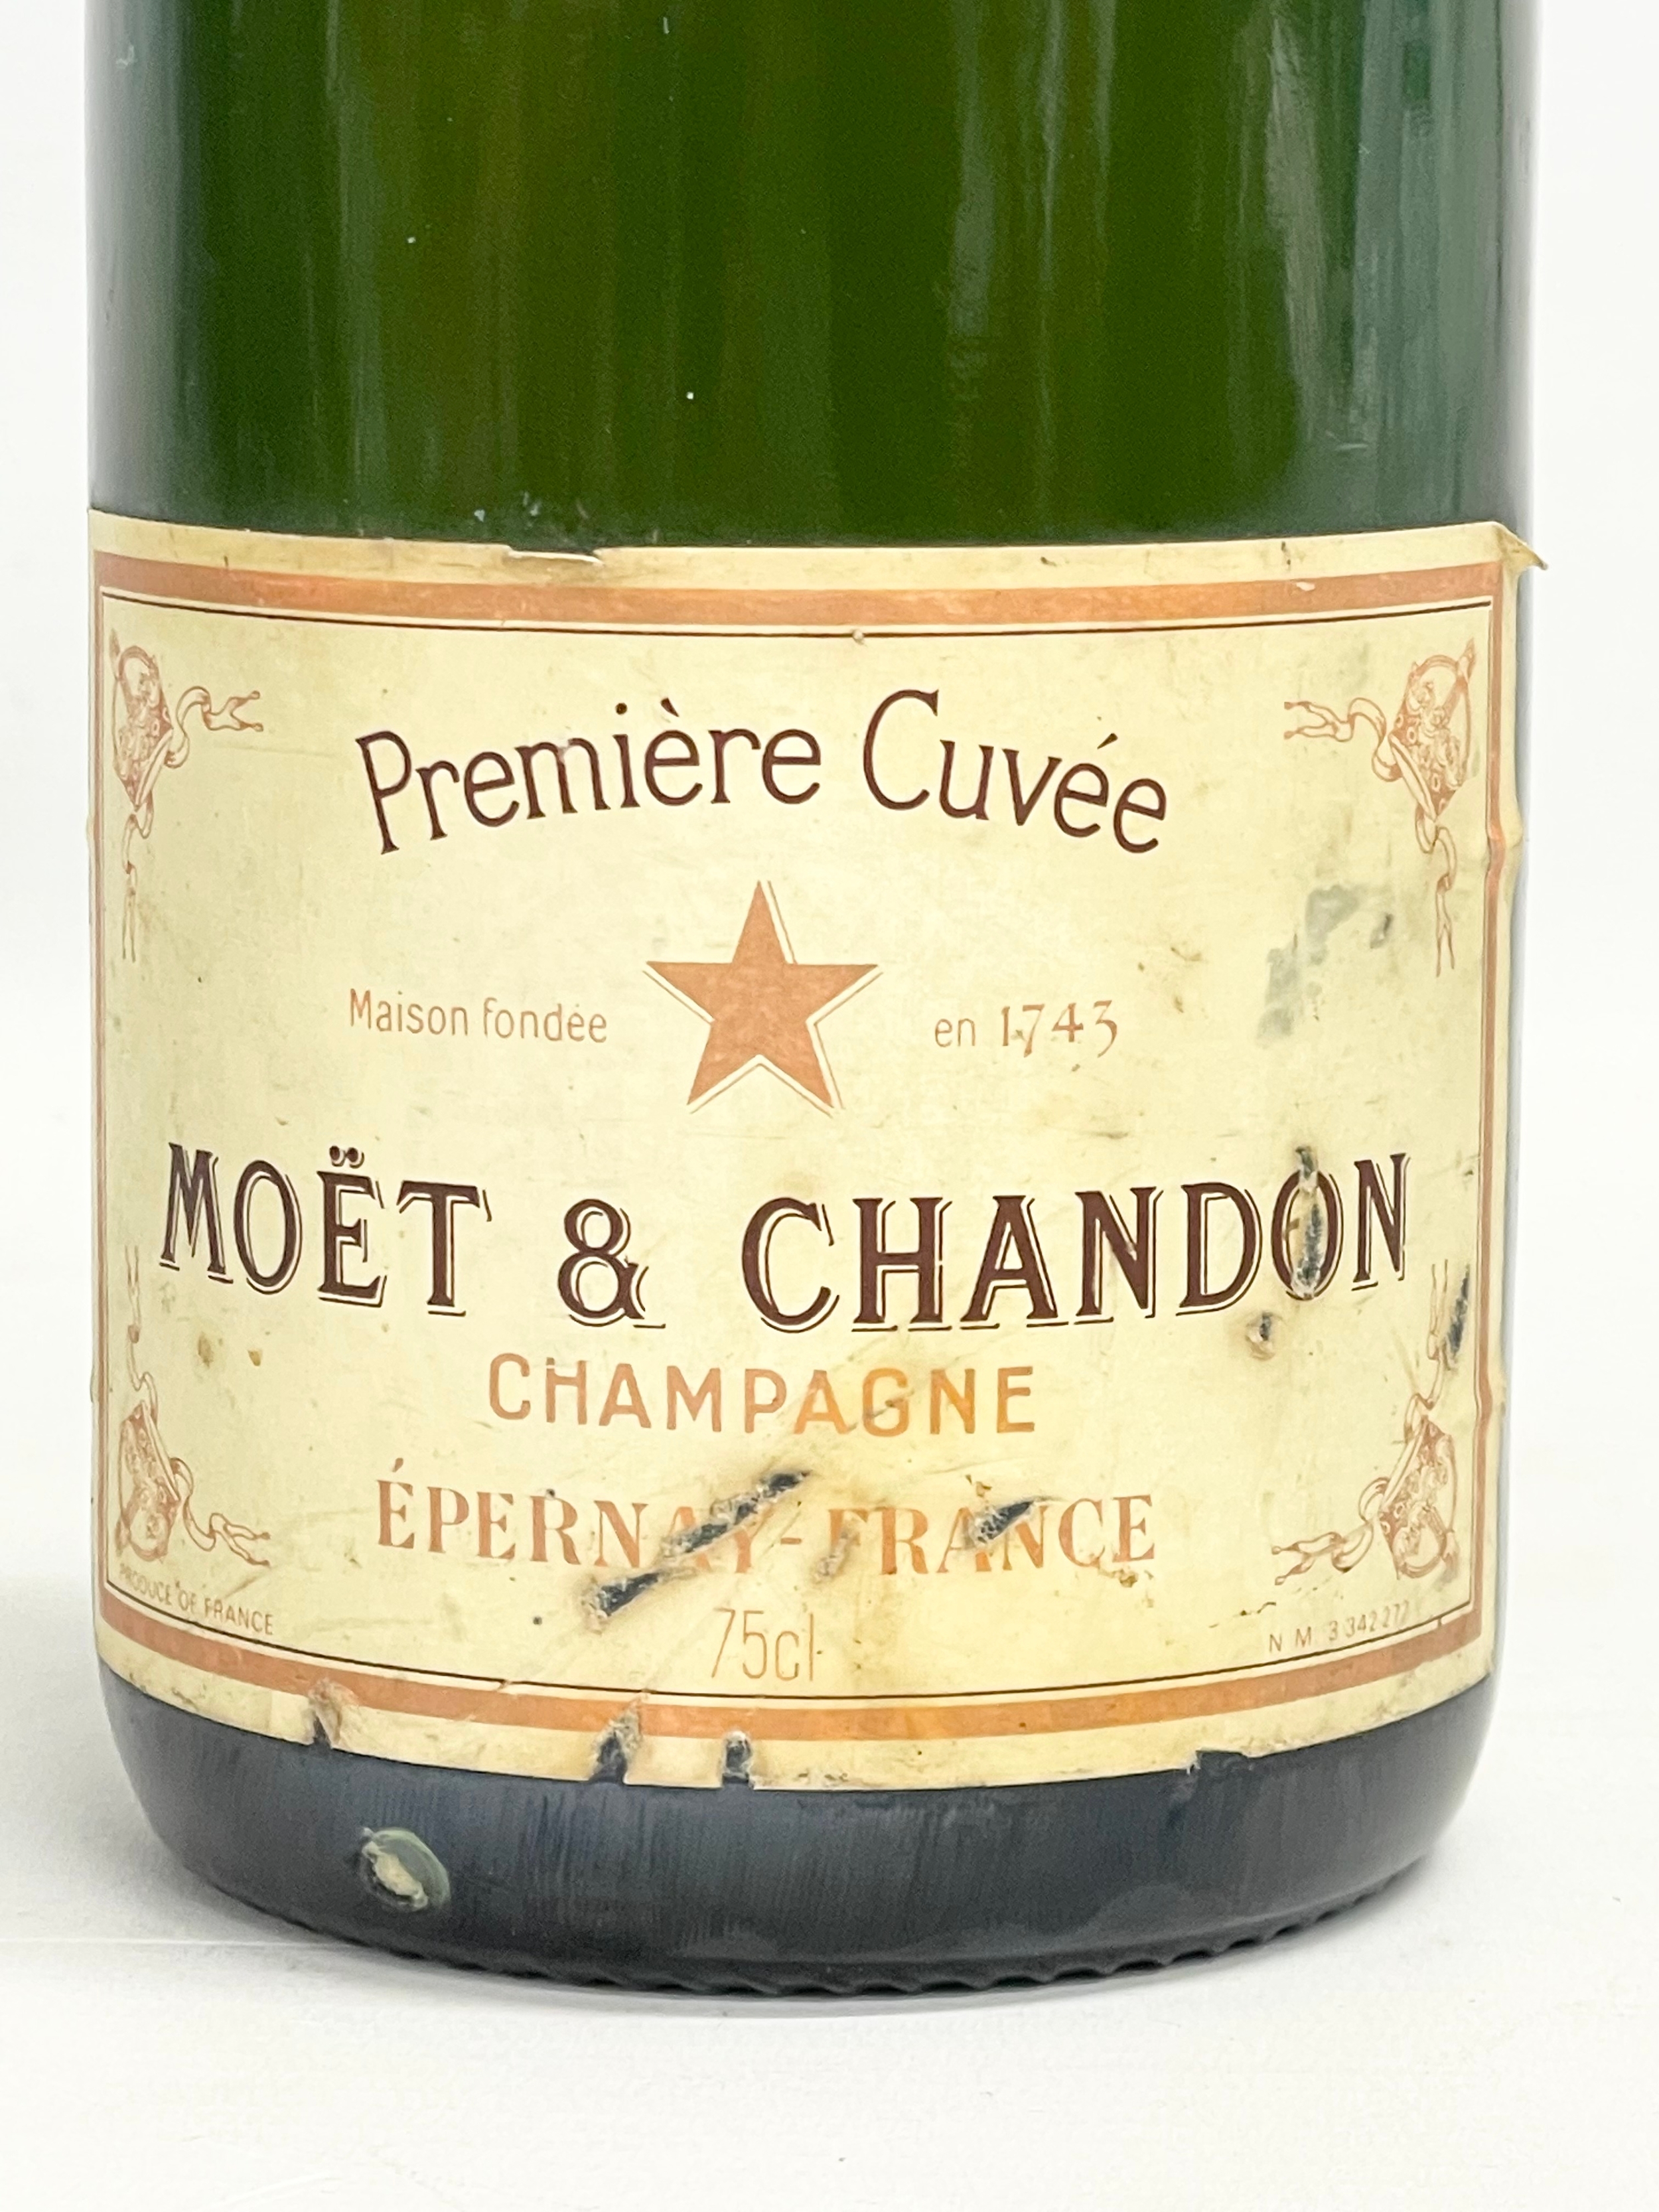 A bottle of vintage Moët & Chandon Premiere Cuvee champagne. 75cl. - Image 2 of 3